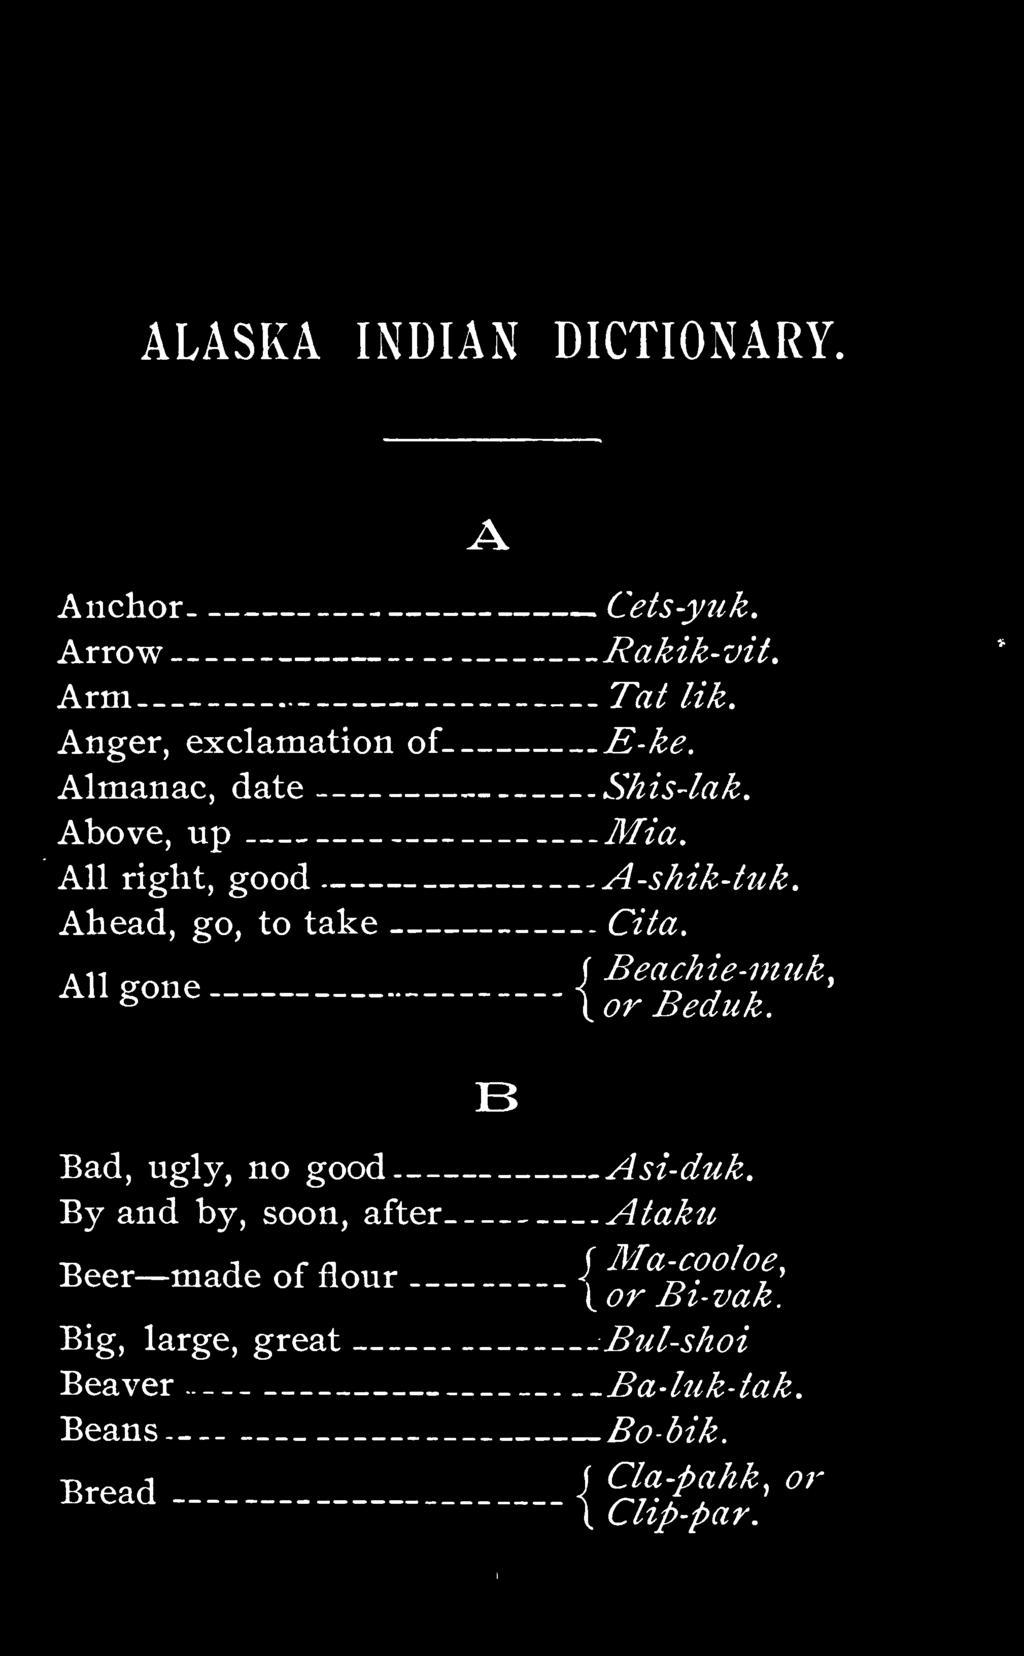 ALASKA INDIAN DICTIONARY. Anchor Arrow Arm Anger, exclamation of Almanac, date Above, up All right, good Ahead, go, to take A Cets-yuk. Rakik-vit. Tat lik. E-ke. Shis-lak. Mia. A-shik-tuk. Cita.